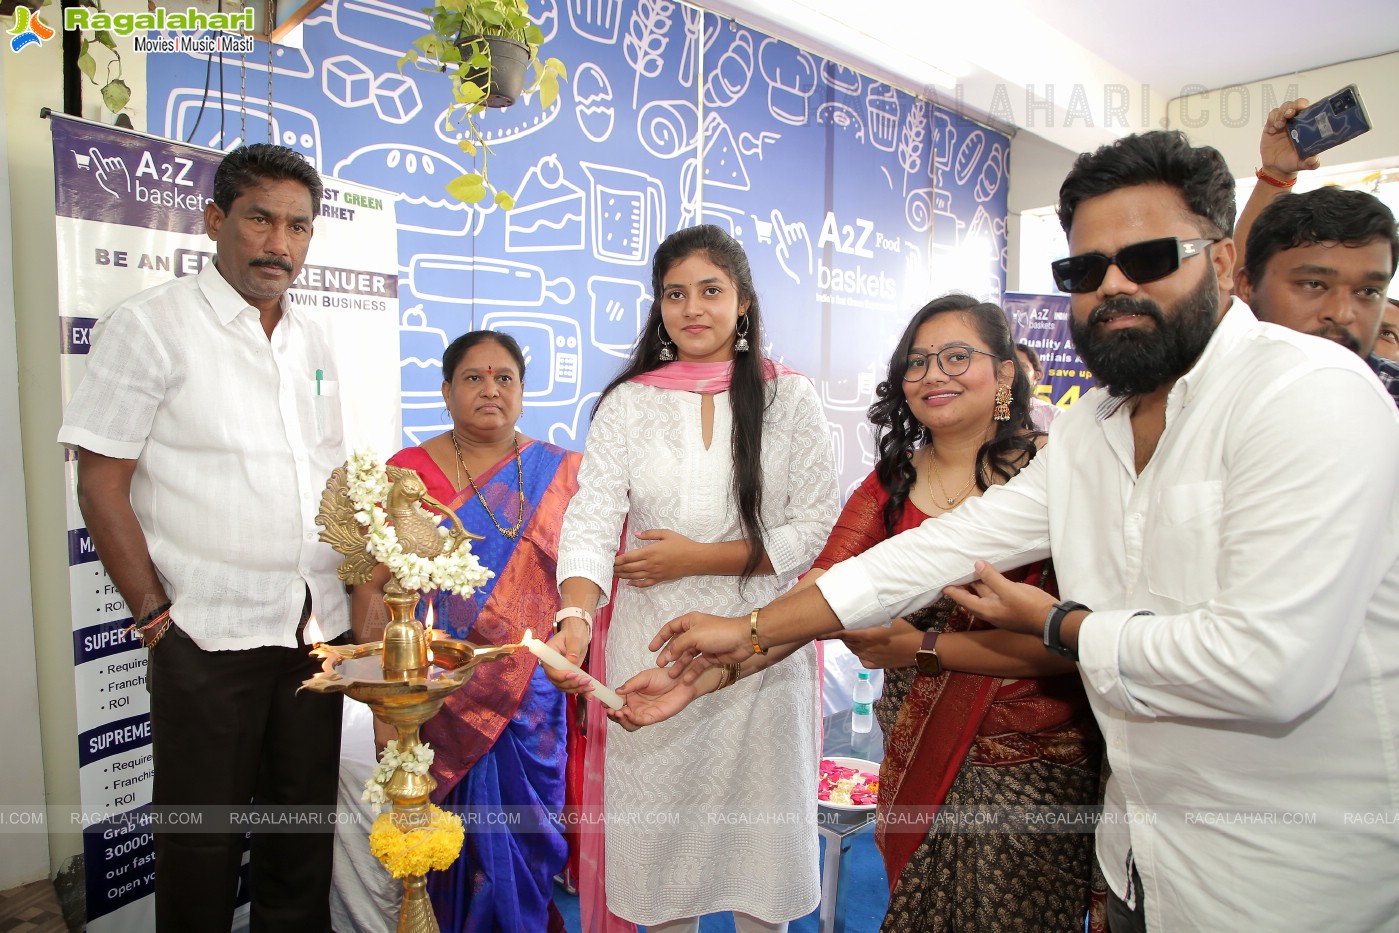 A2Z Baskets India's 1st  Green Super Market Launches Its New Store at Narsingi